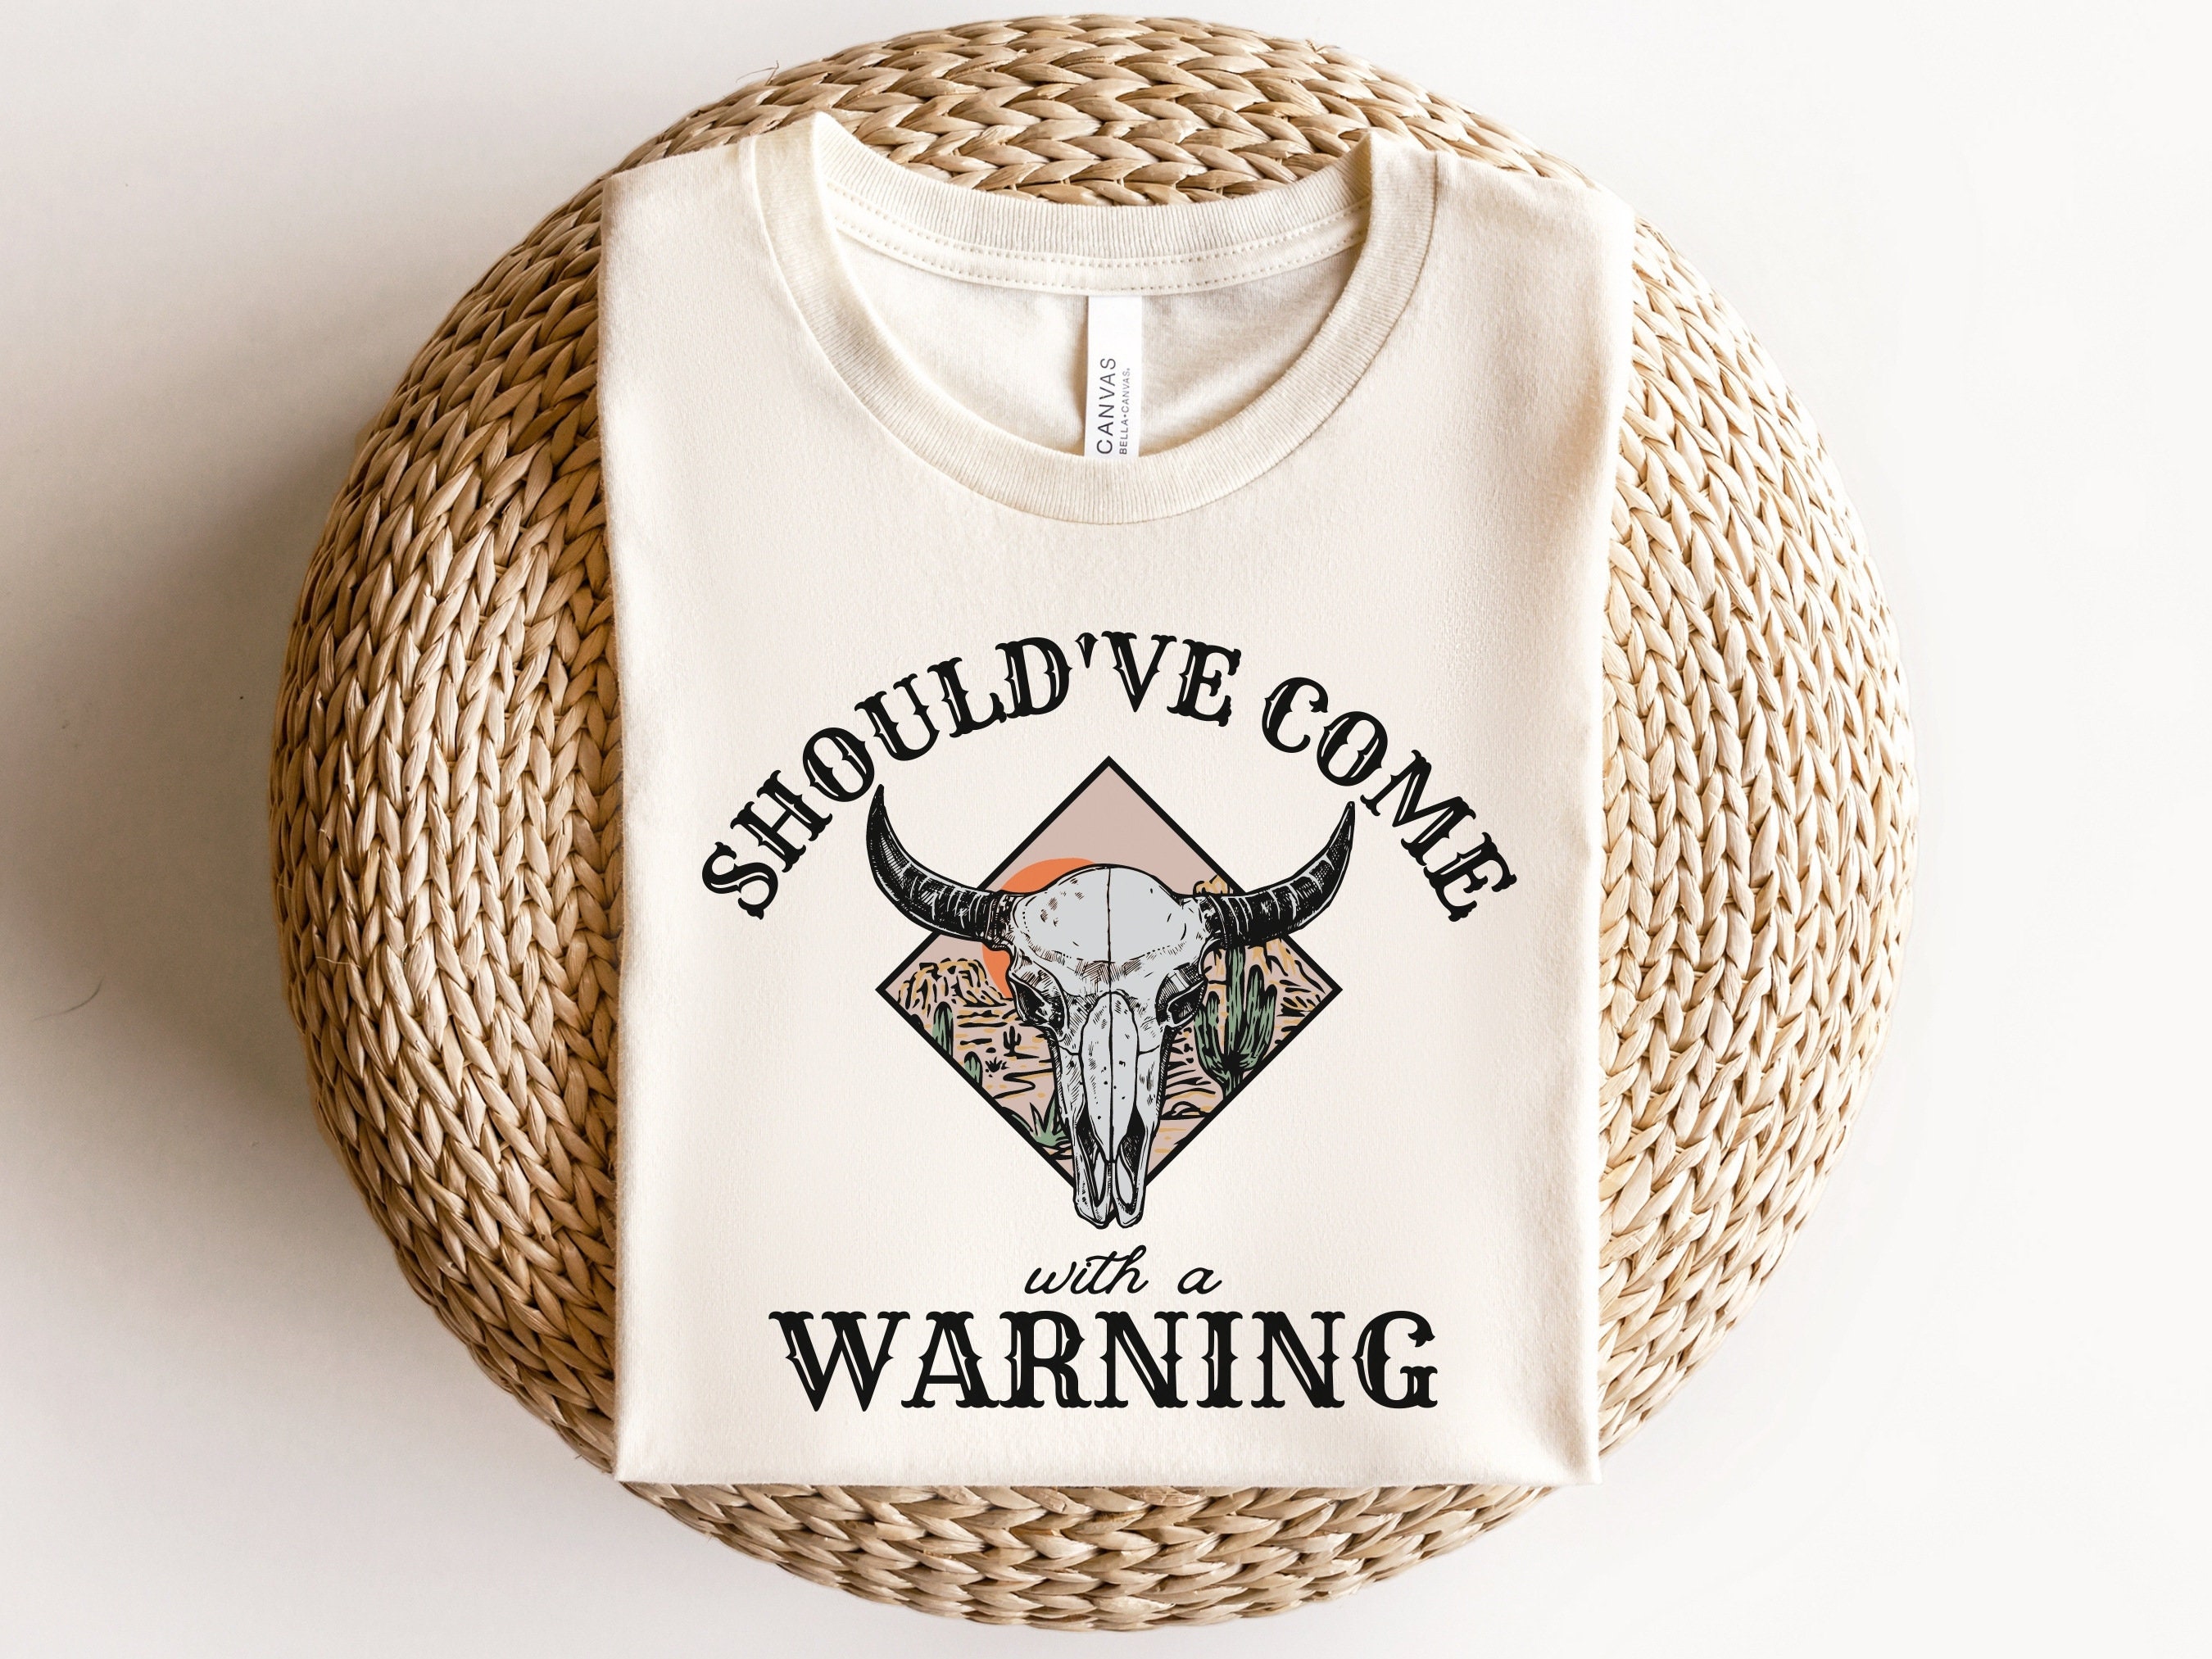 Custom Time To Take Warning Labels Off Funny Men Women T Shirt Cotton S 5xl  W Pocket T-shirt By Custom-designs - Artistshot